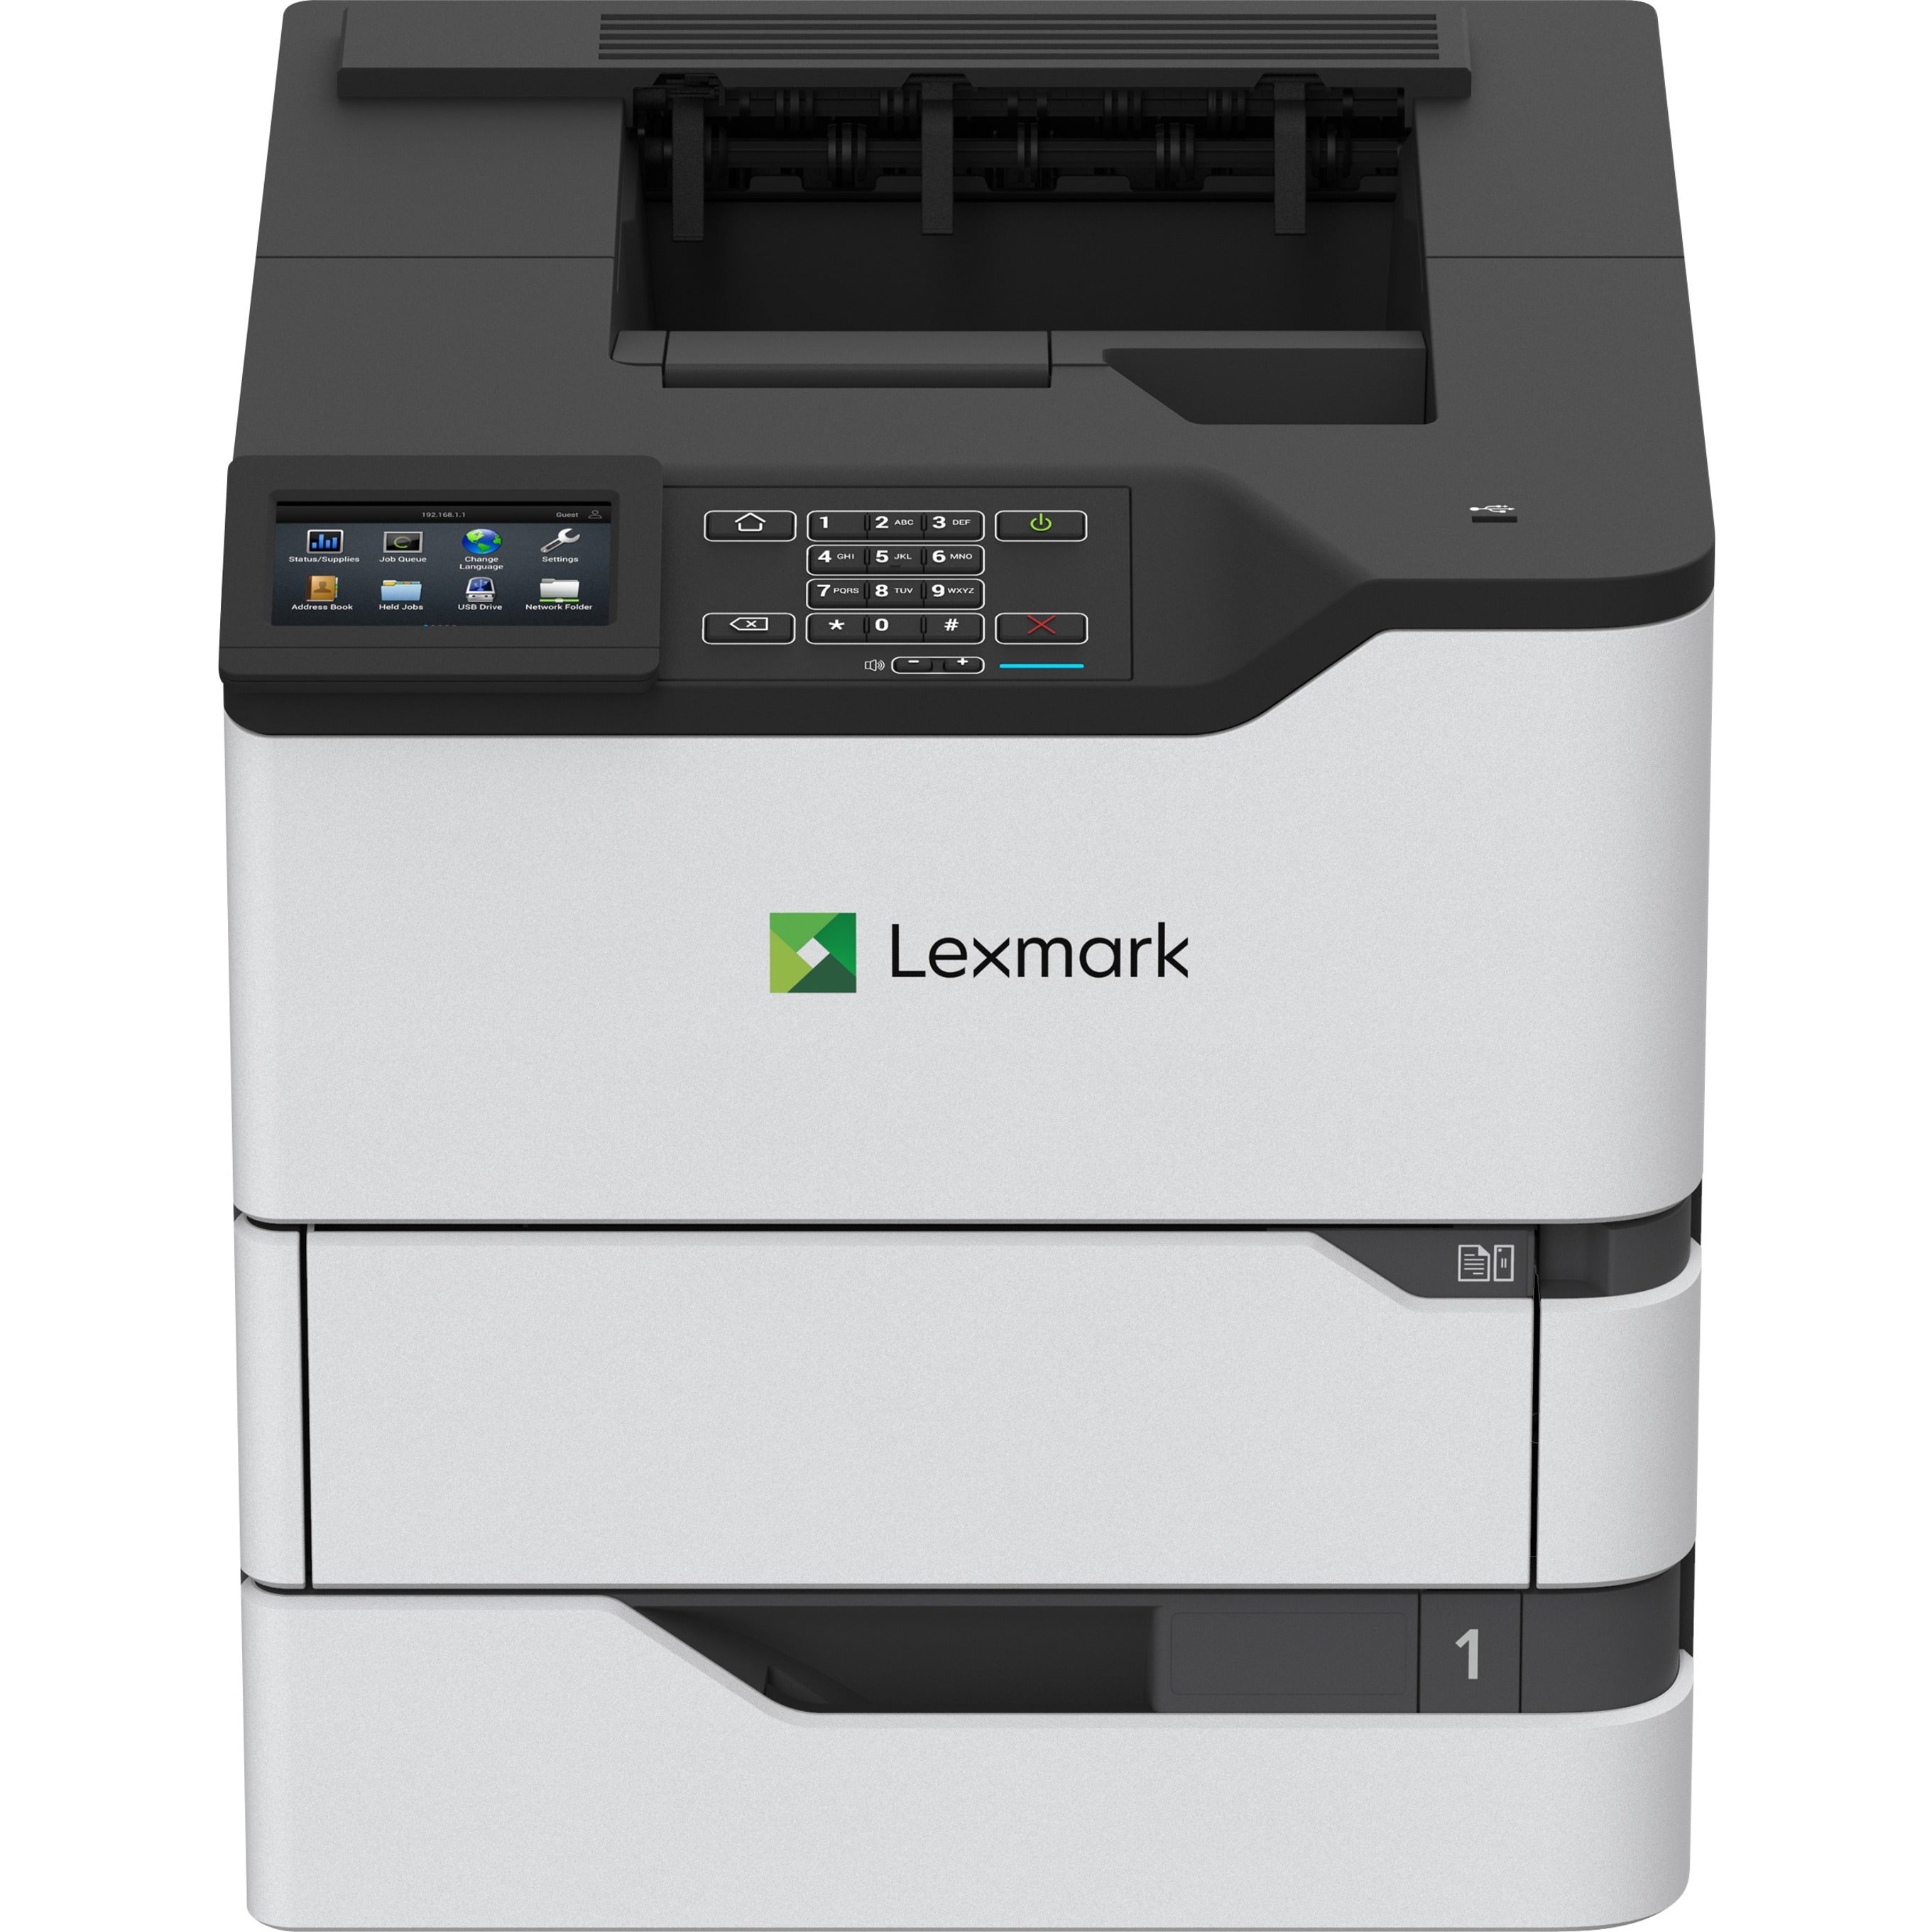 Lexmark 50G0110 MS822de Desktop Laser Printer - Monochrome, 55 ppm, Automatic Duplex Printing, 1200 x 1200 dpi